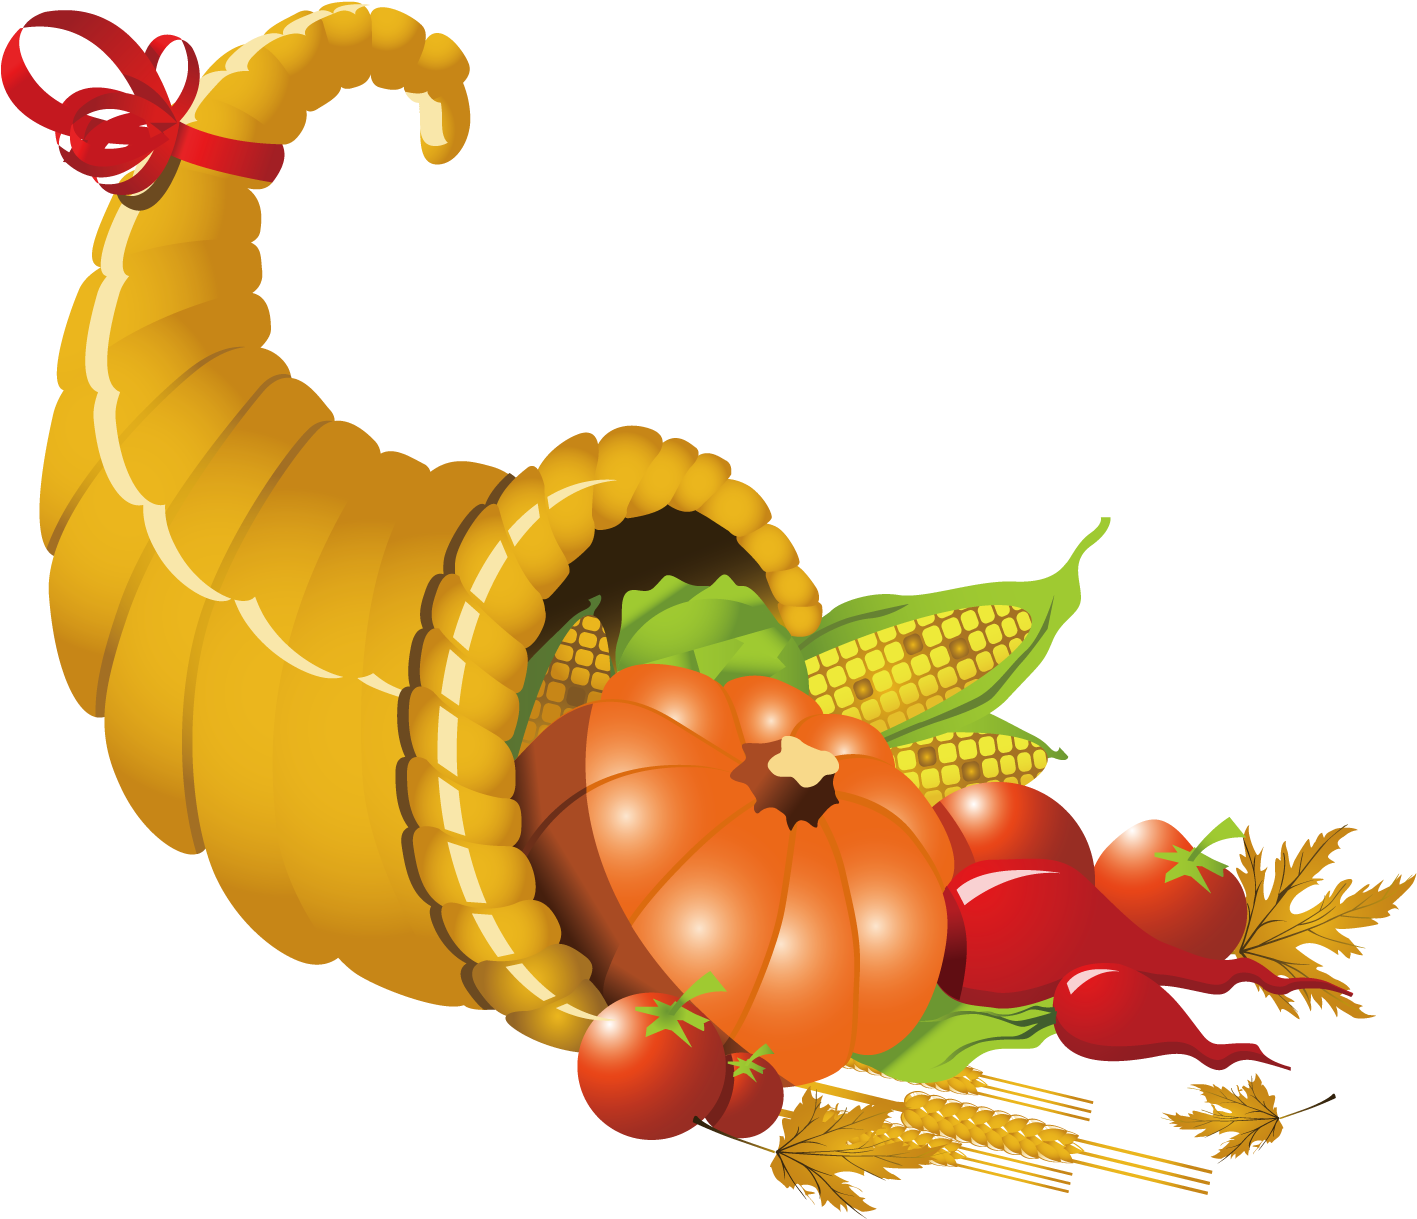 Cornucopia Thanksgiving Clip Art - Cornucopia Thanksgiving Clip Art (1500x1500)